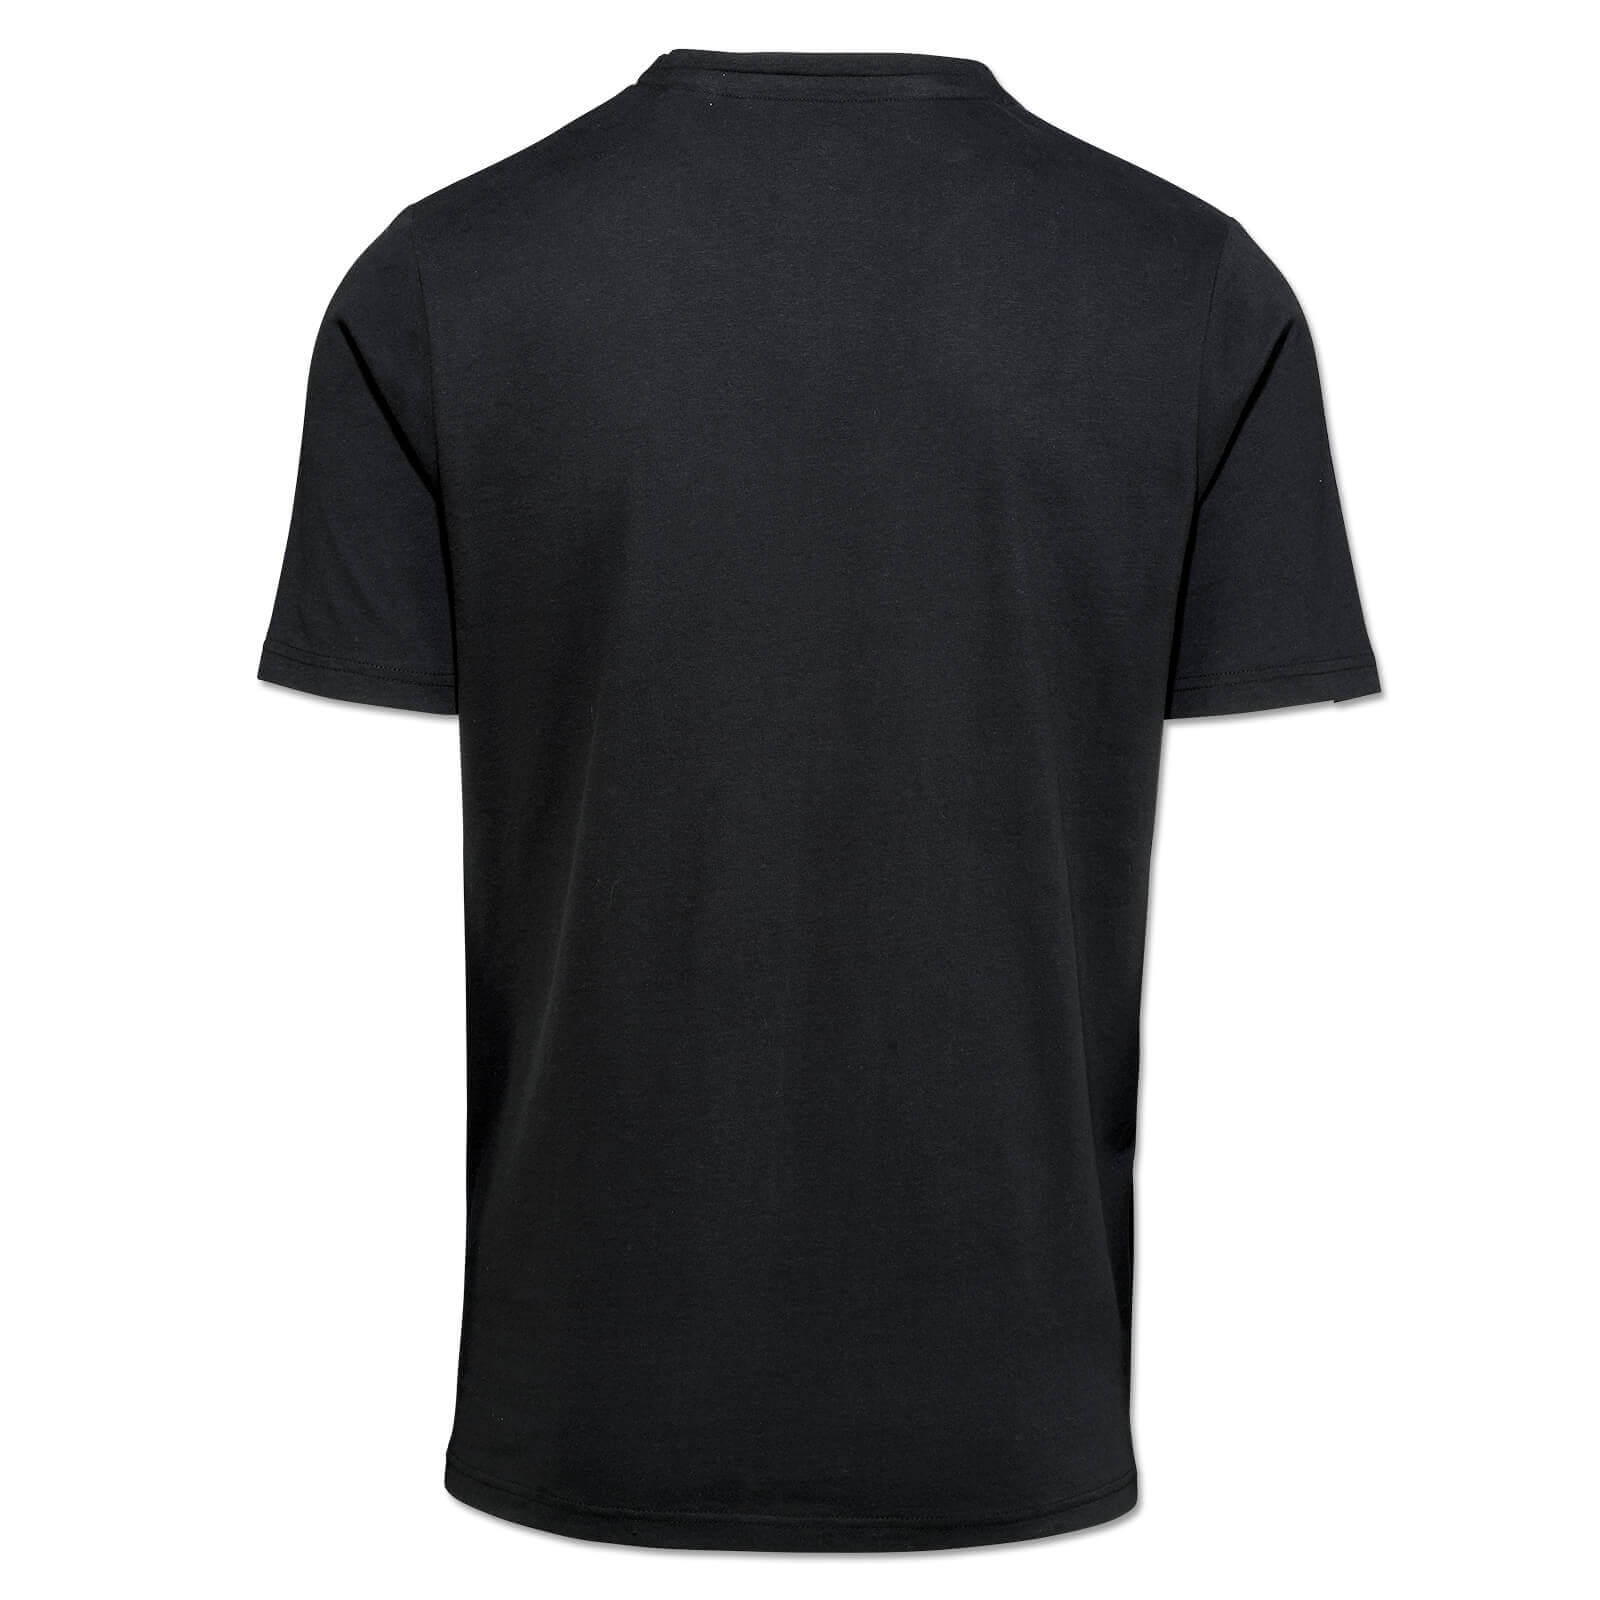 Borussia Dortmund T-Shirt "1909%" - grey